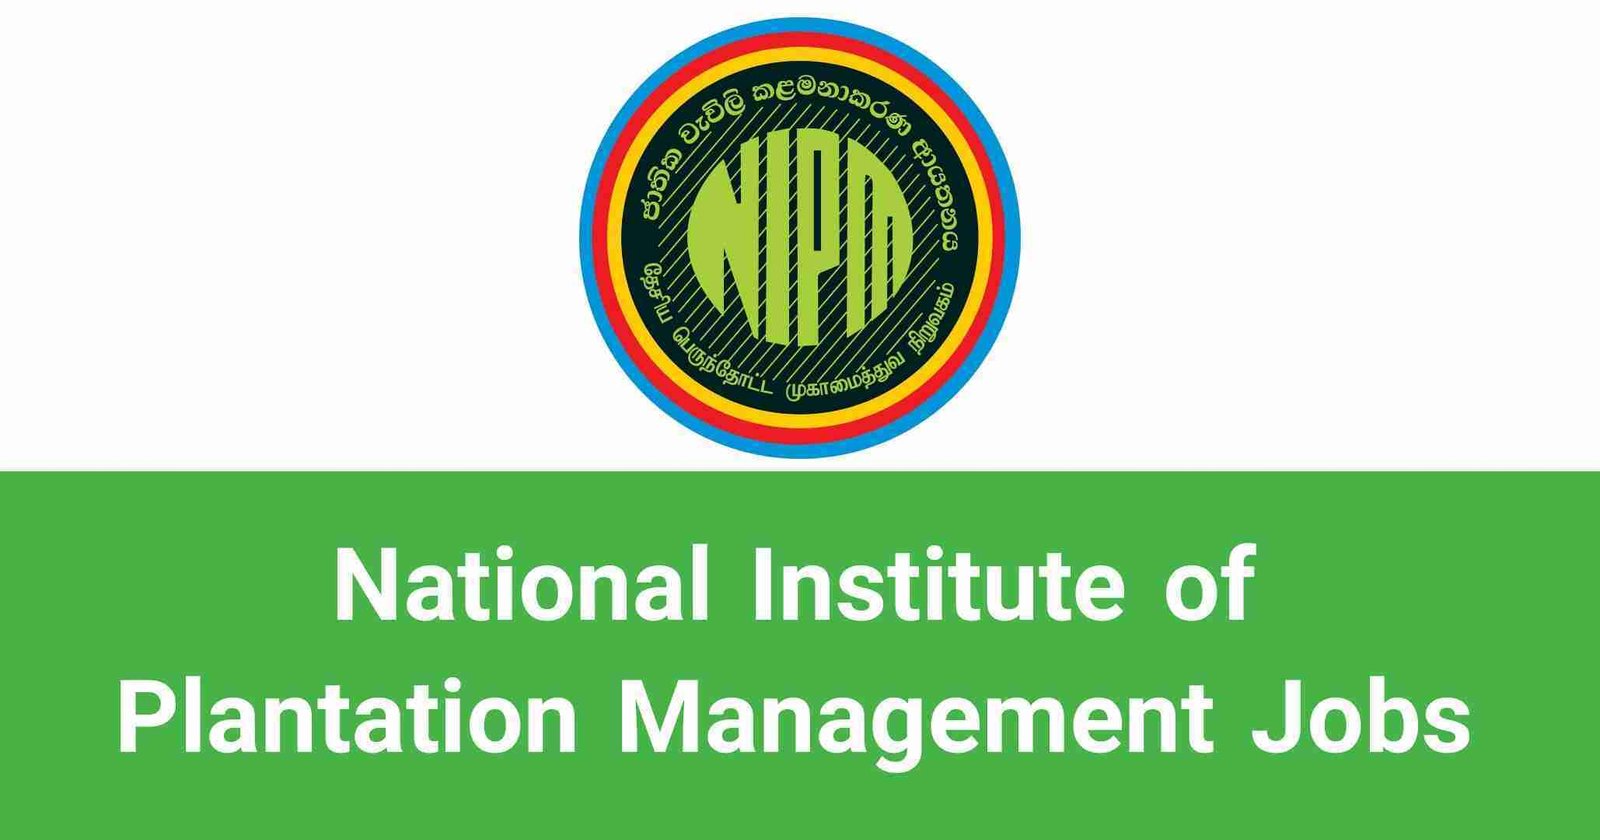 National Institute of Plantation Management Jobs Vacancies